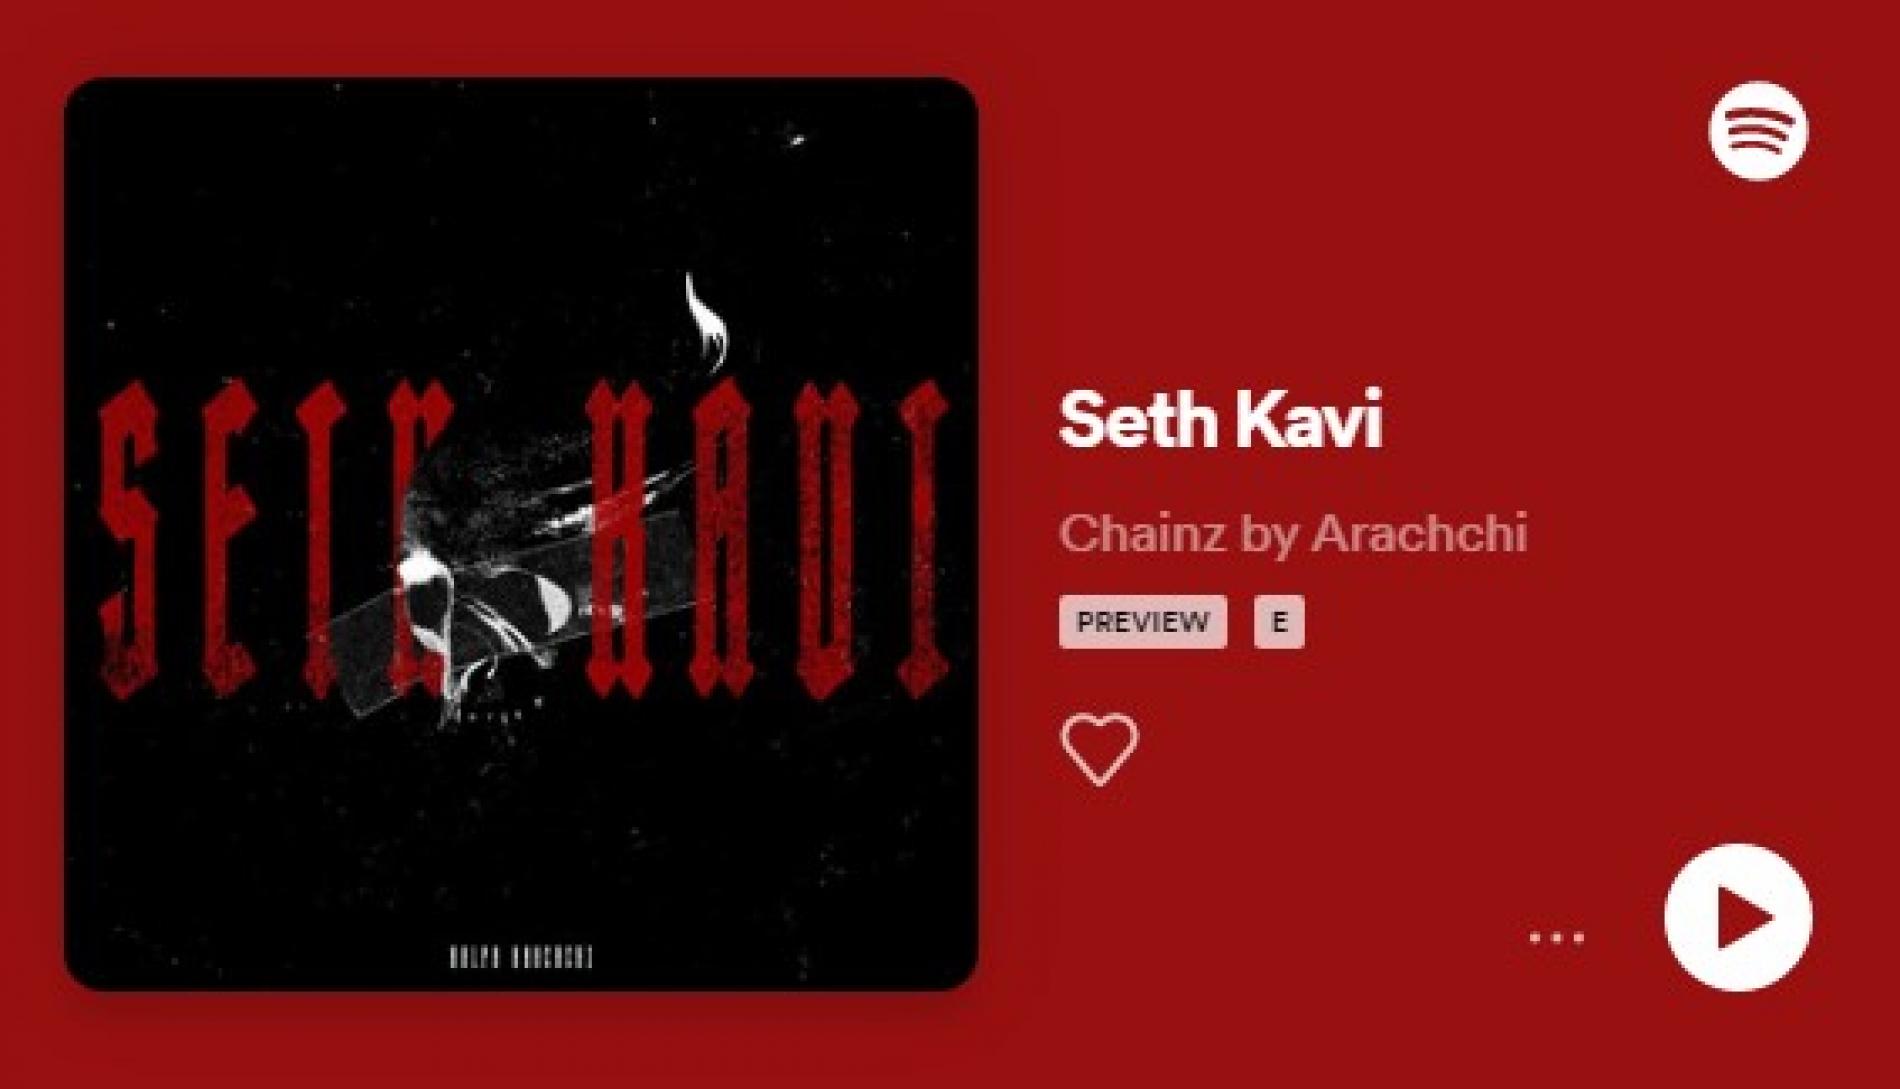 New Music : Chainz By Arachchi – Seth Kavi